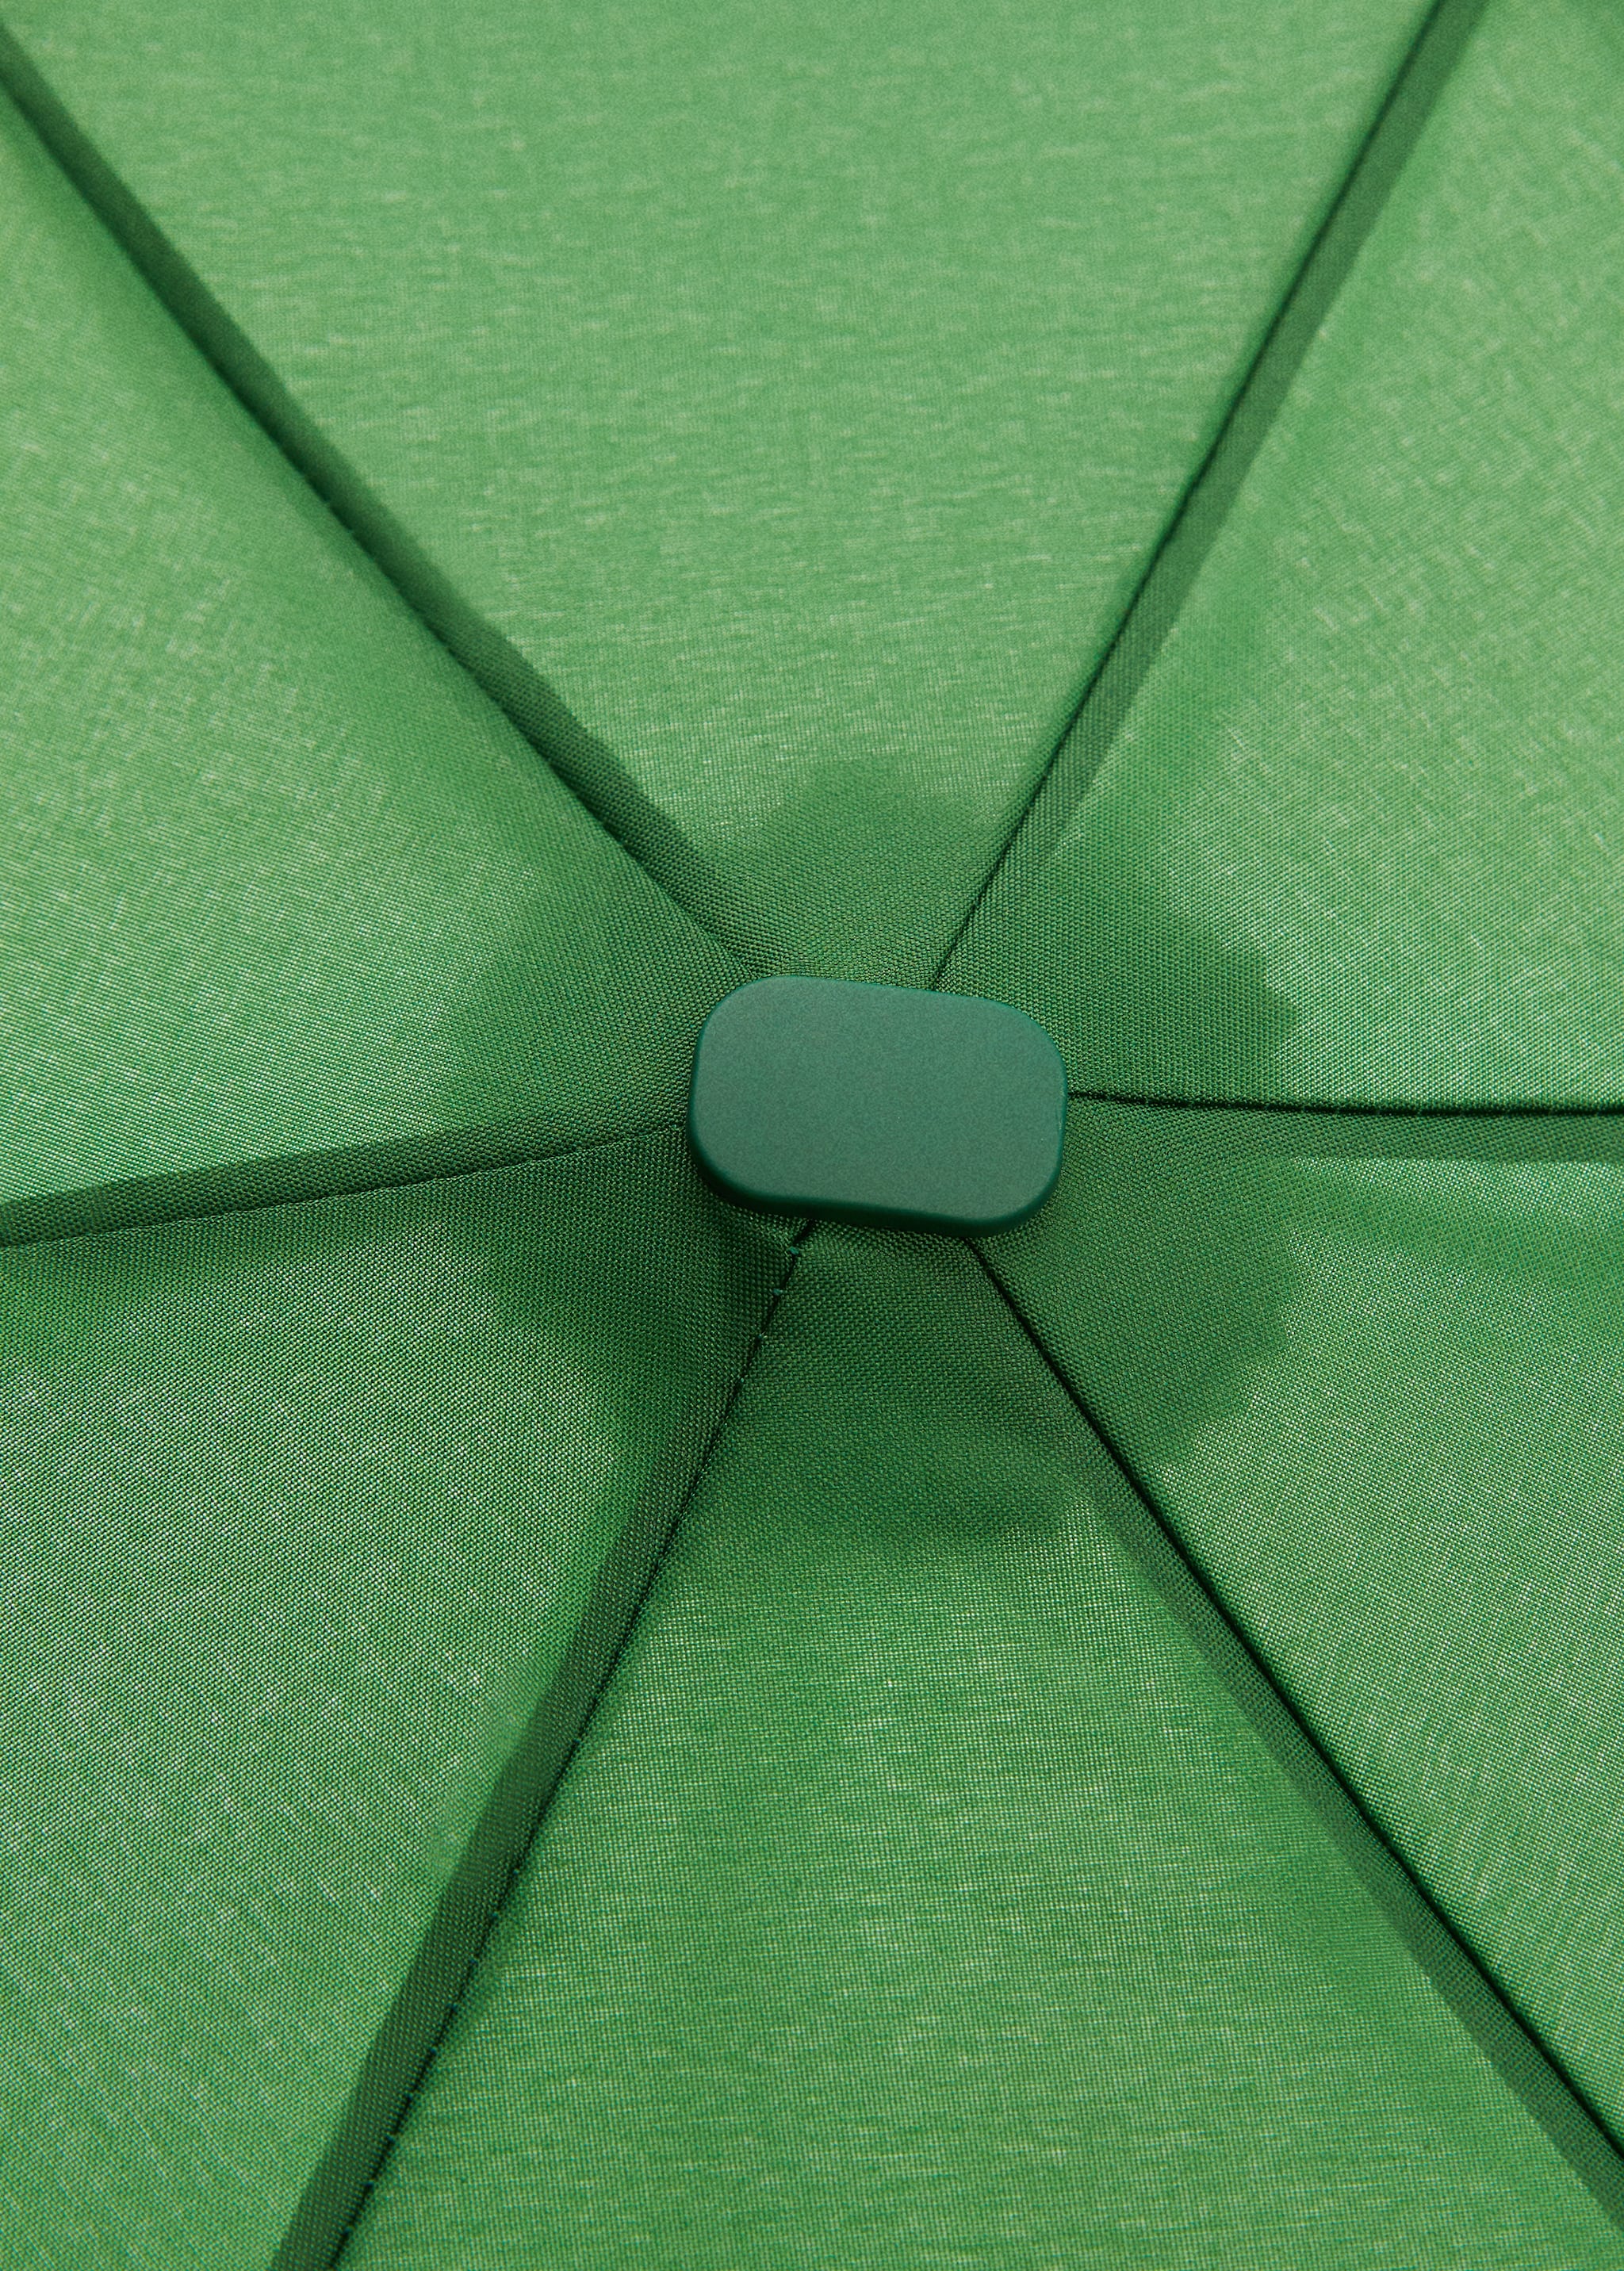 Mini folding umbrella - Details of the article 1